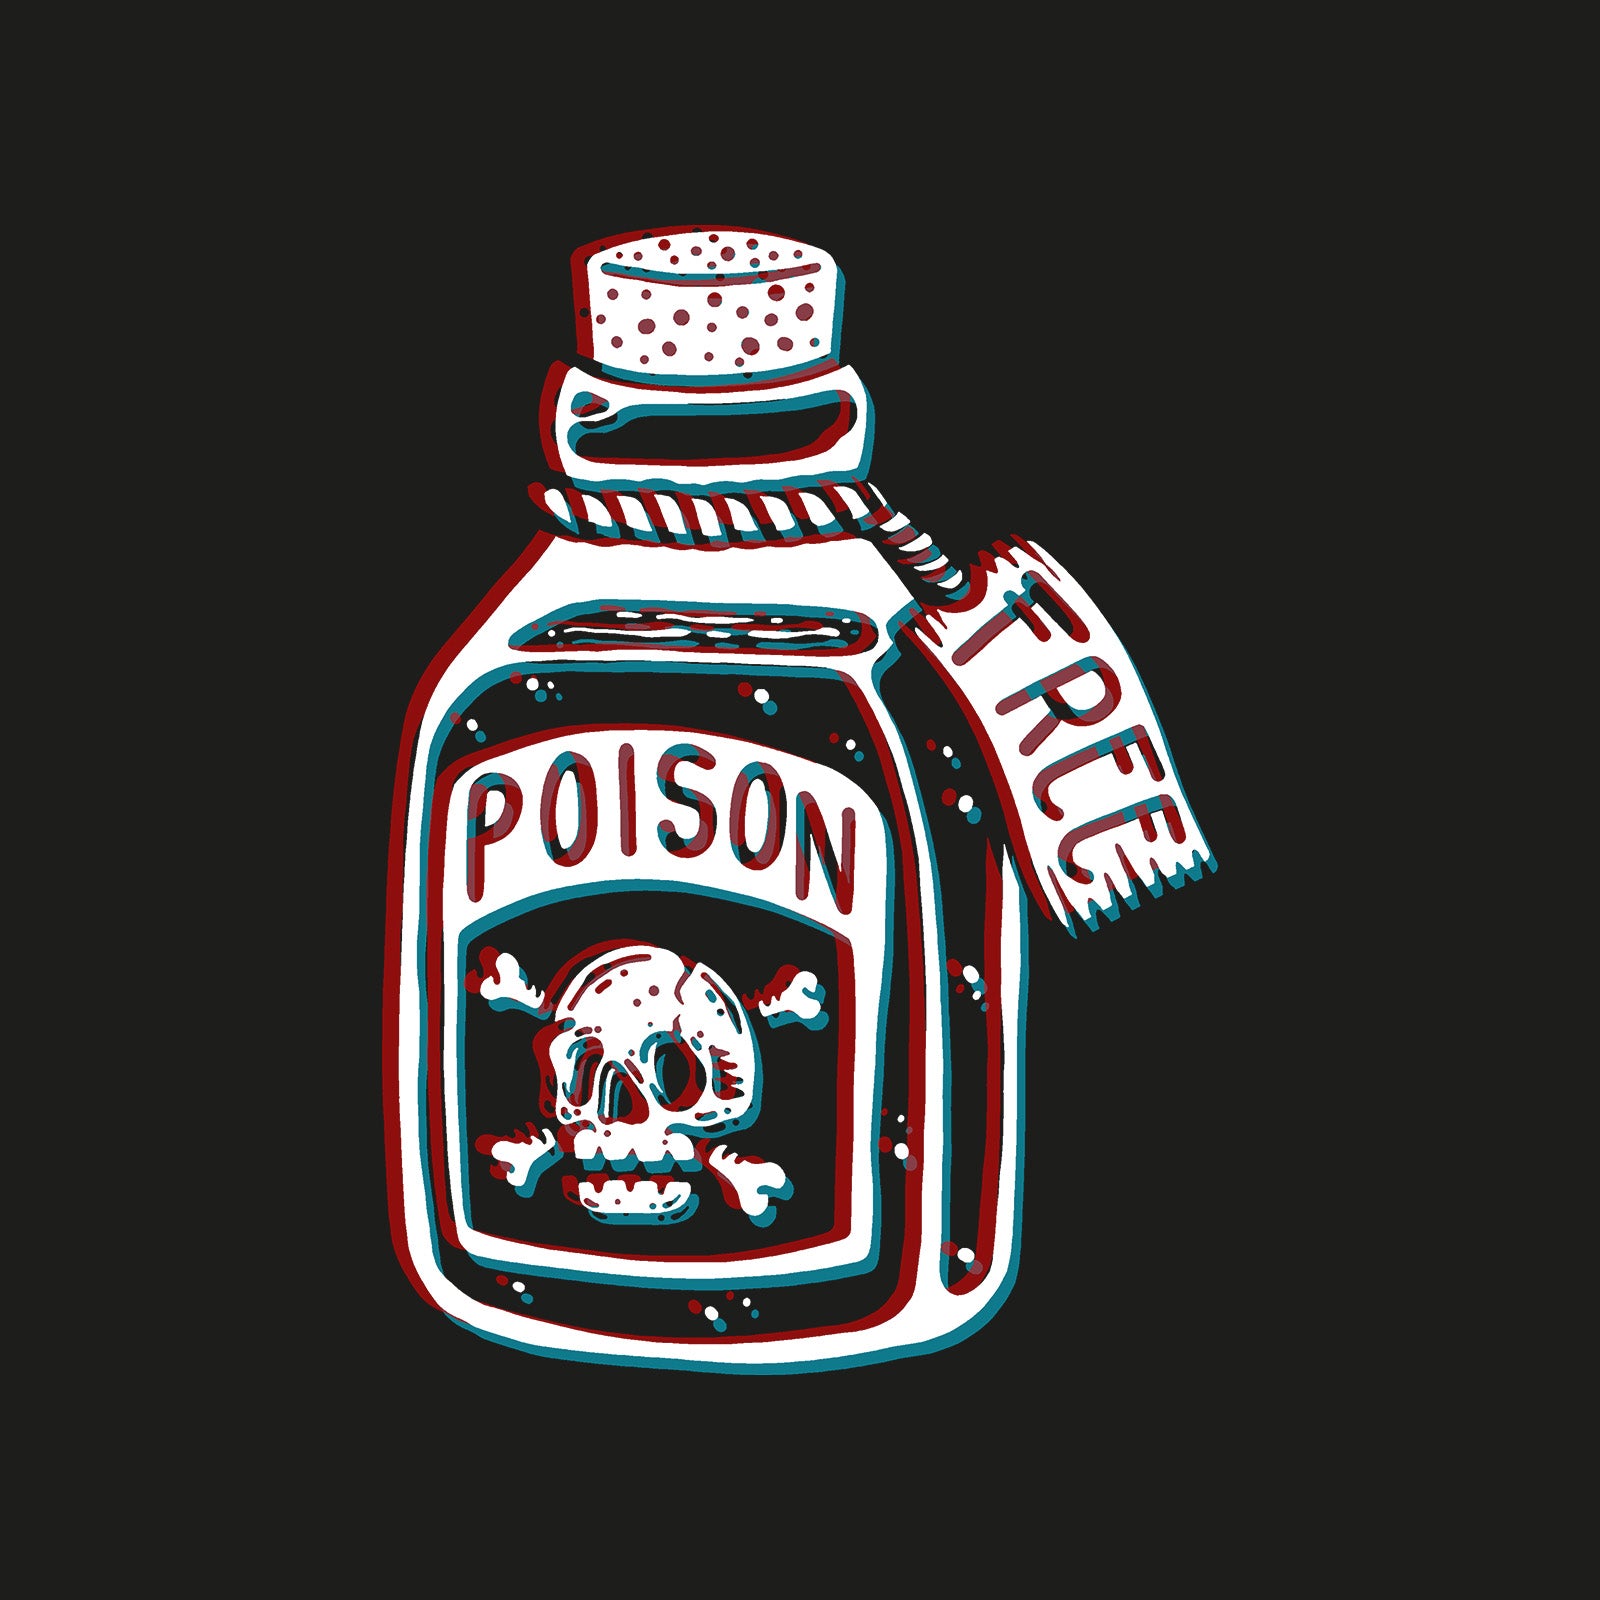 Minnieskull Poison Skull Print T-Shirt - chicyea